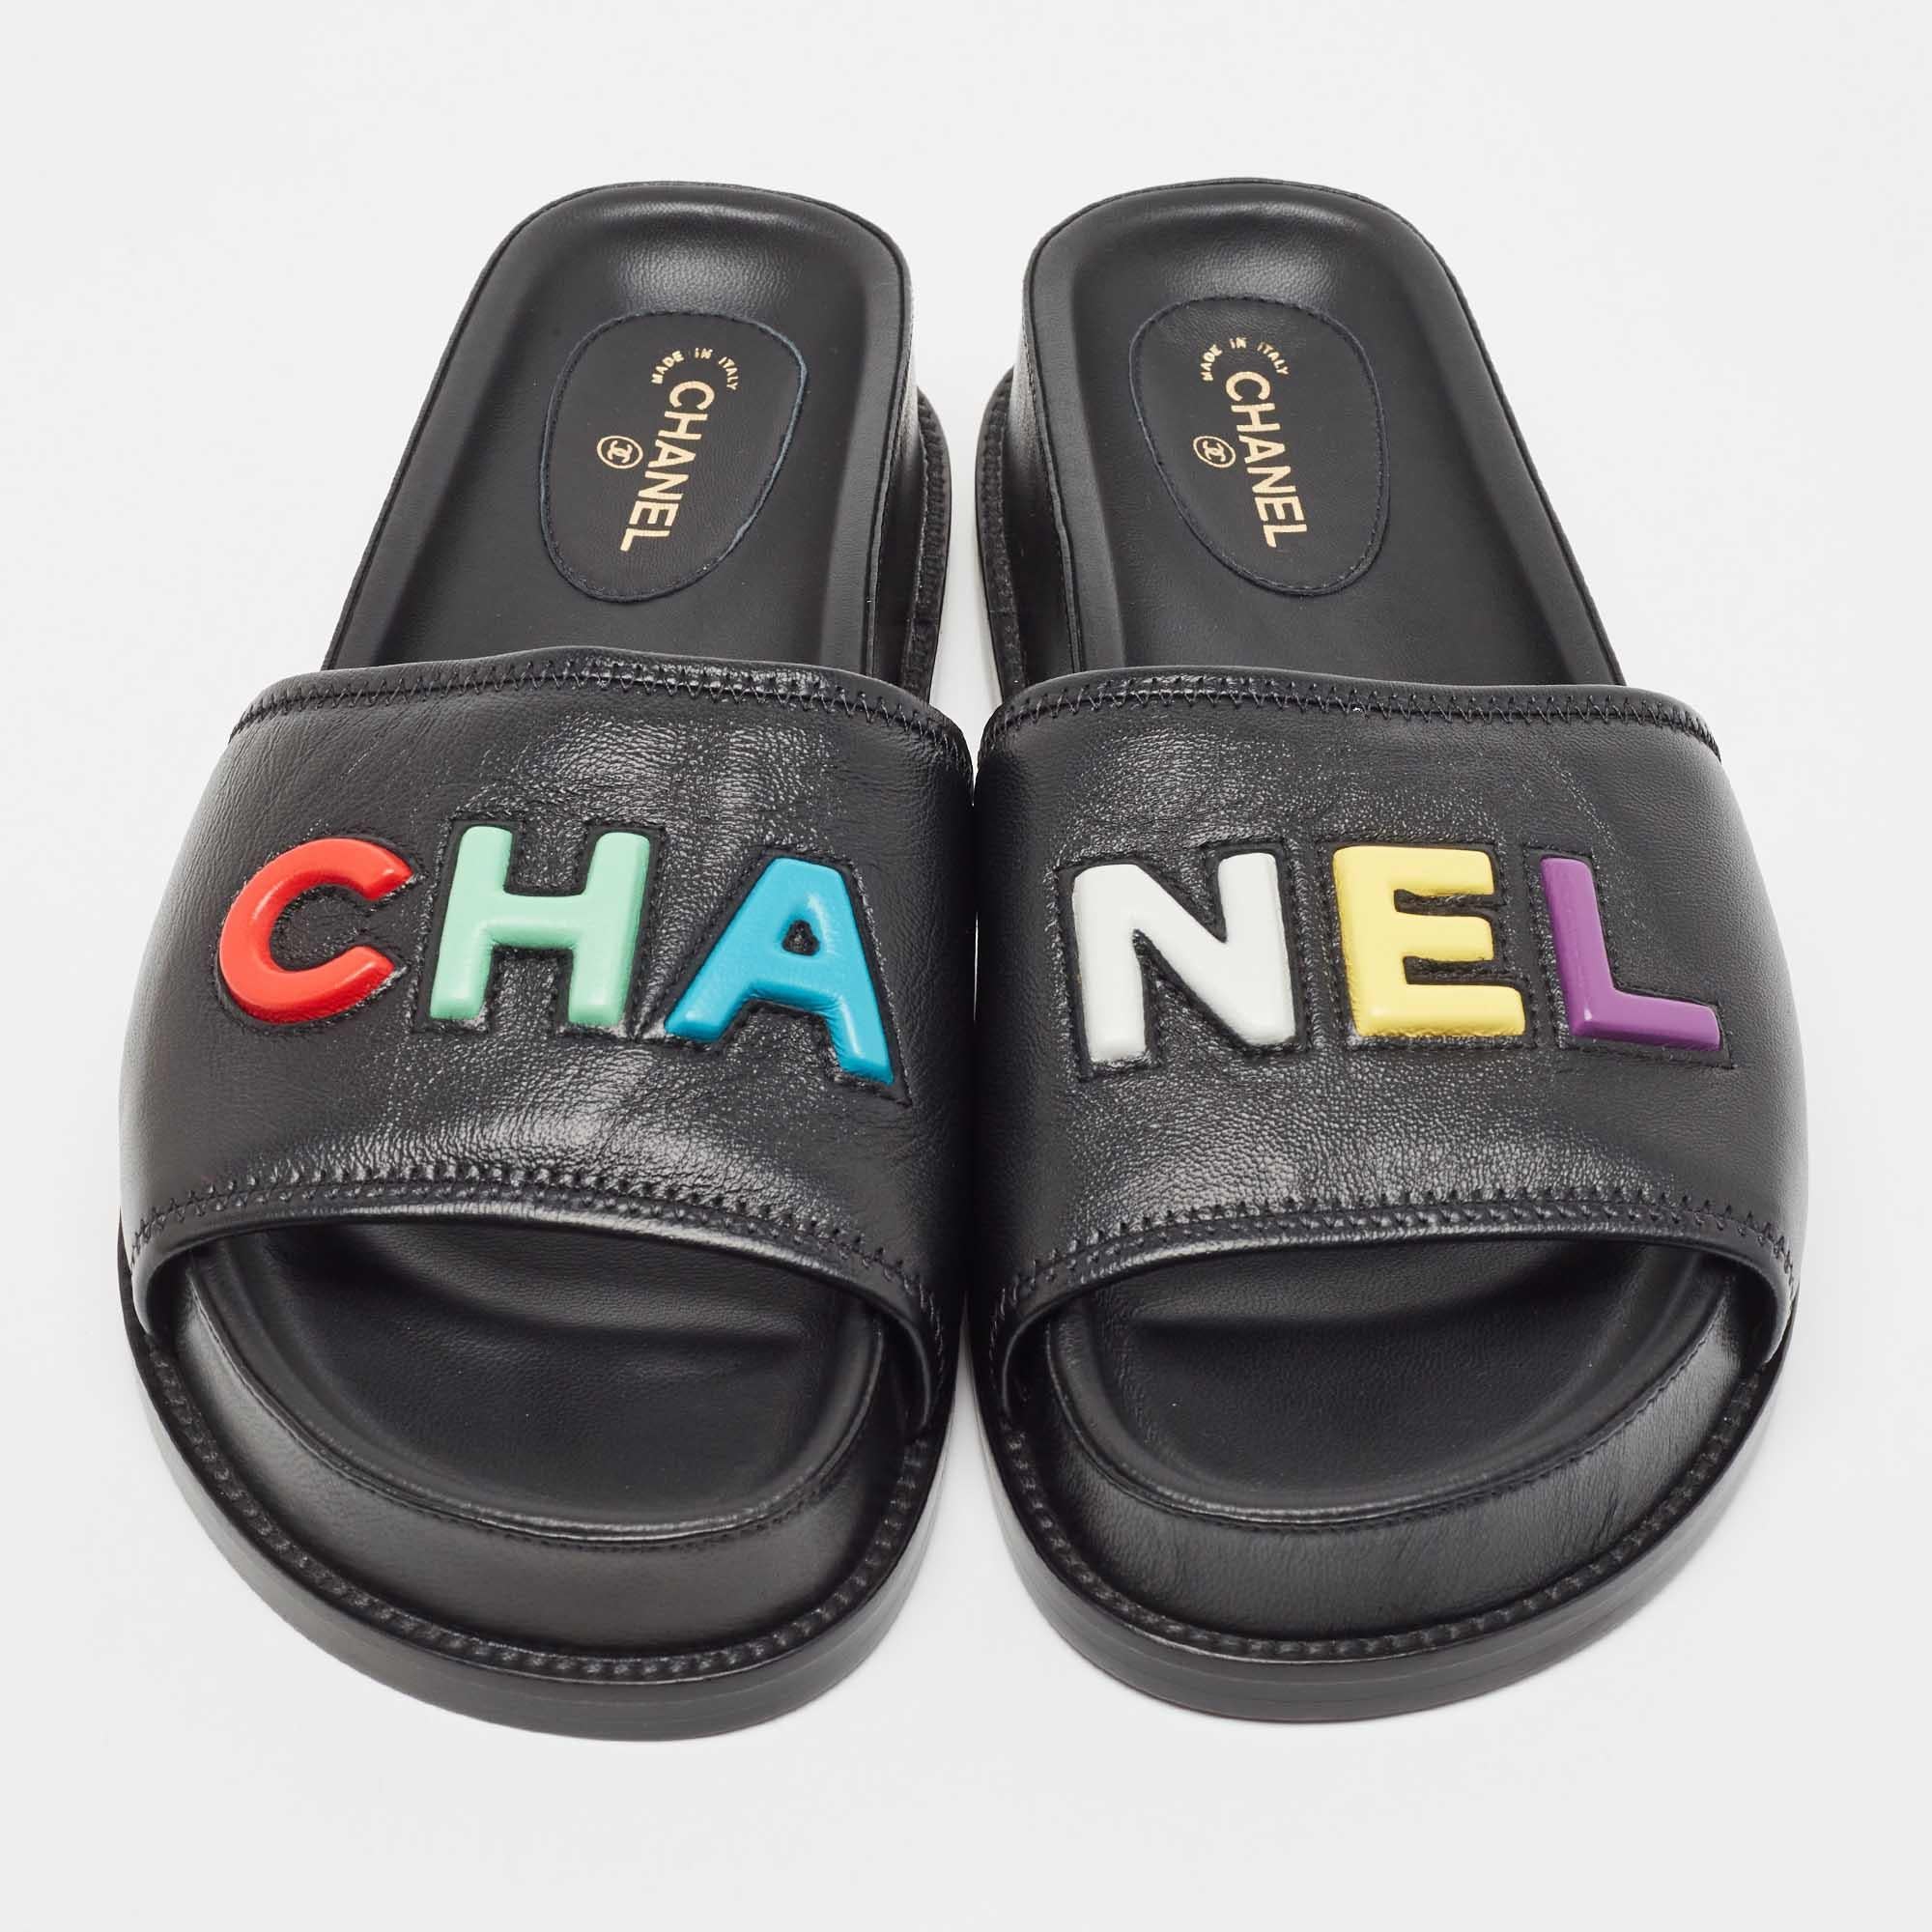 Women's Chanel Black Leather CHA NEL Letter Logo Flat Slides Size 40